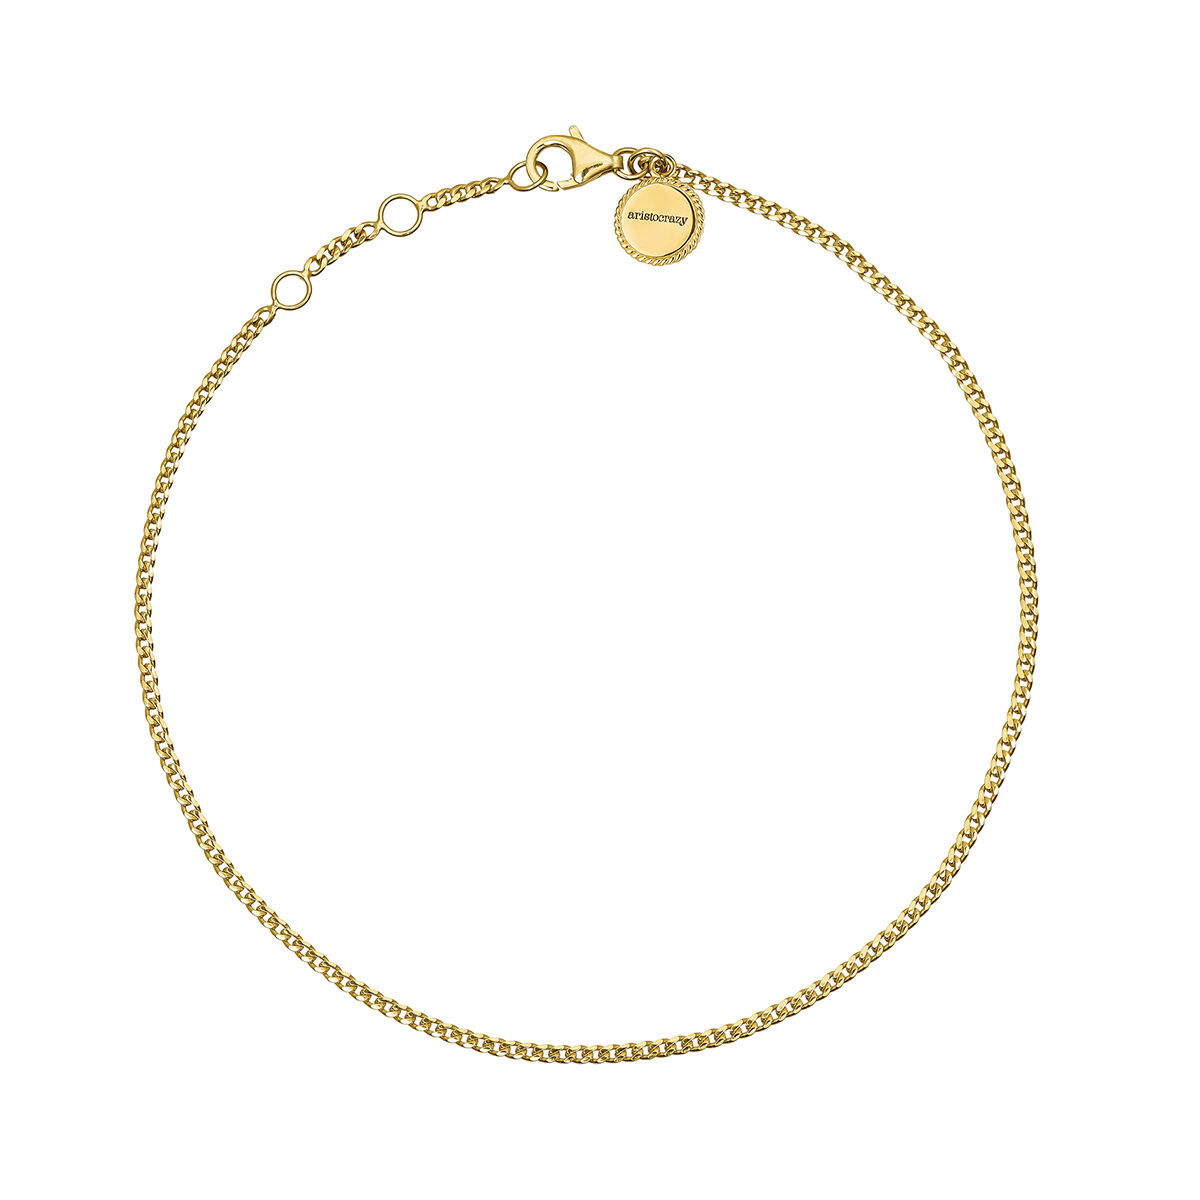 Curb ankle bracelet in gold-plated silver, J05106-02, hi-res